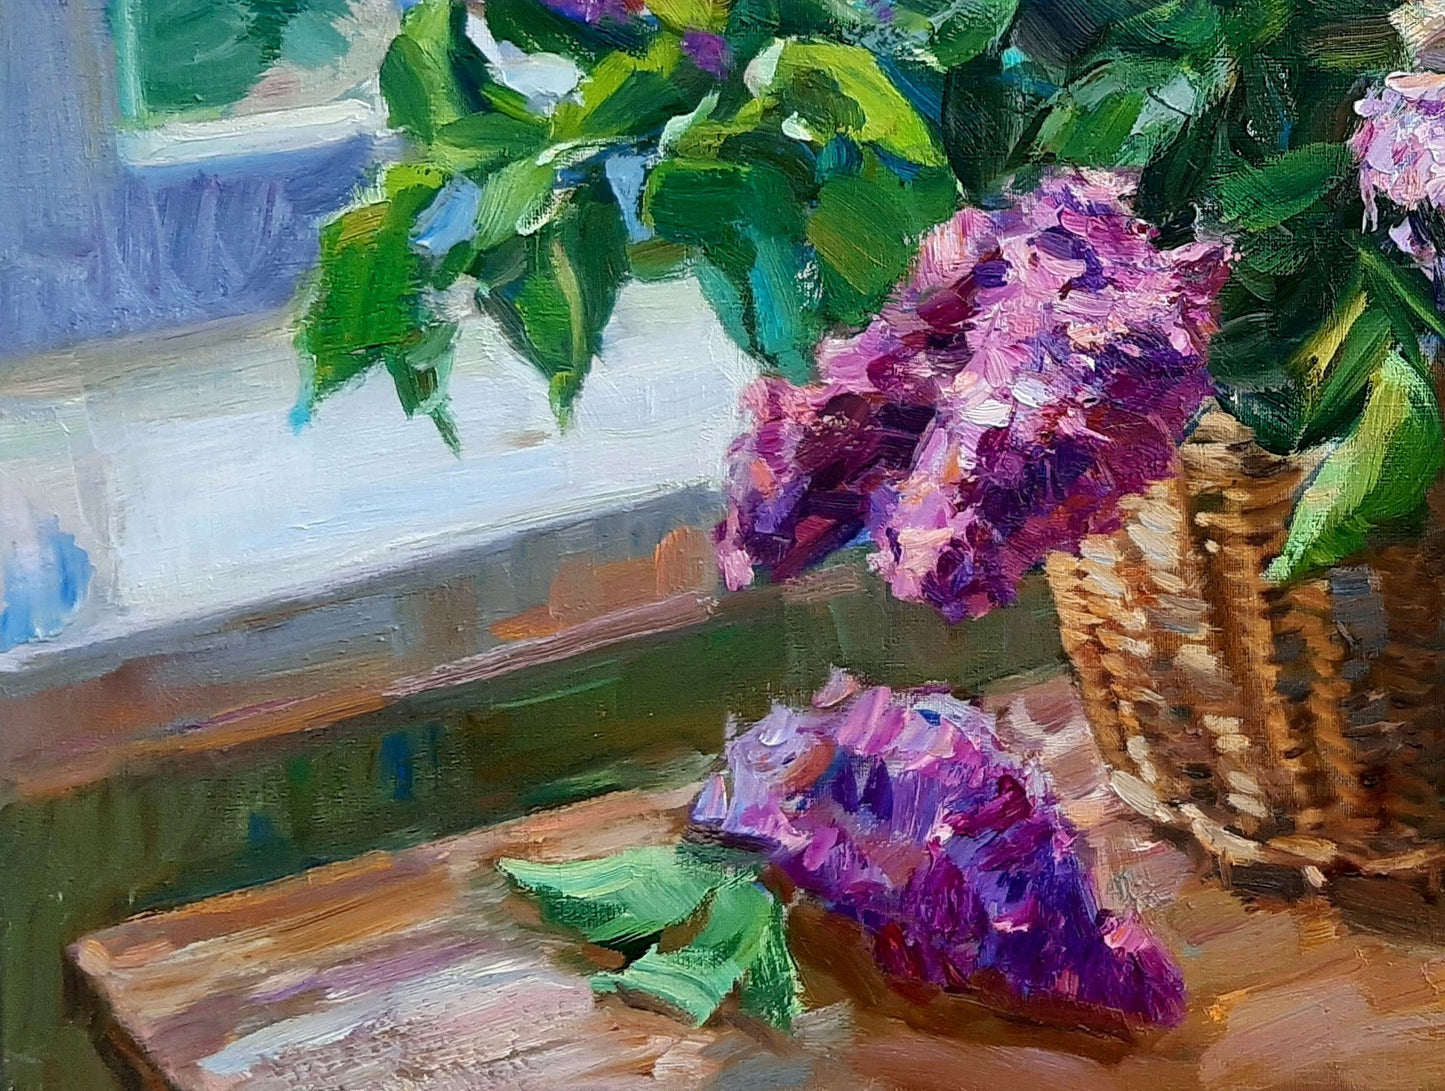 Oli painting Lilac by the window Pereta Vyacheslav